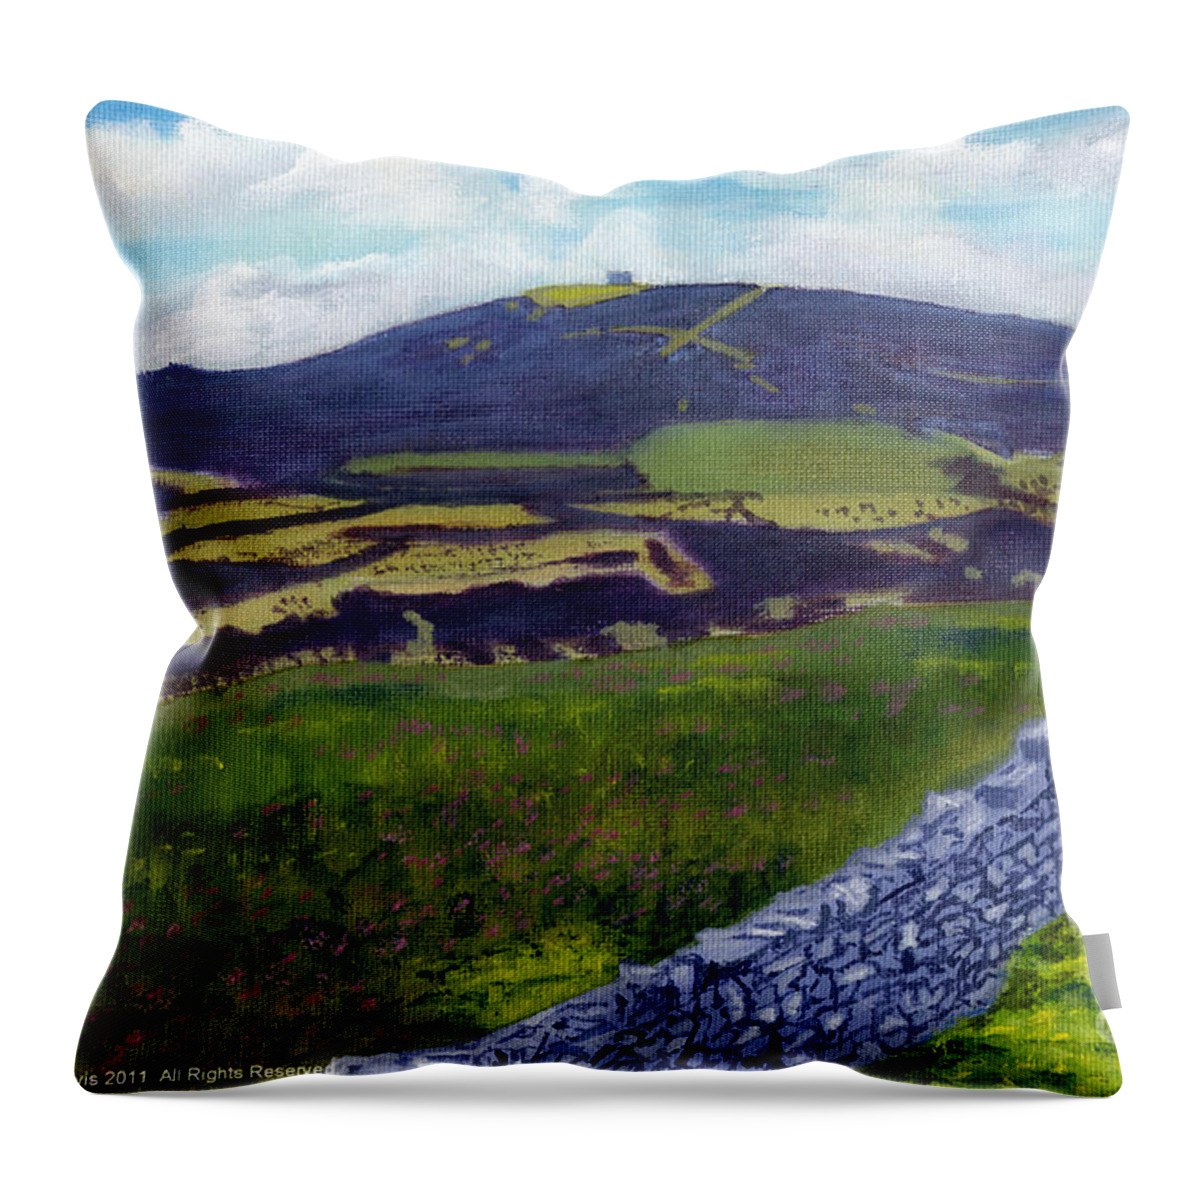 Moel Famau Hill Painting Throw Pillow featuring the painting Moel Famau hill painting by Edward McNaught-Davis